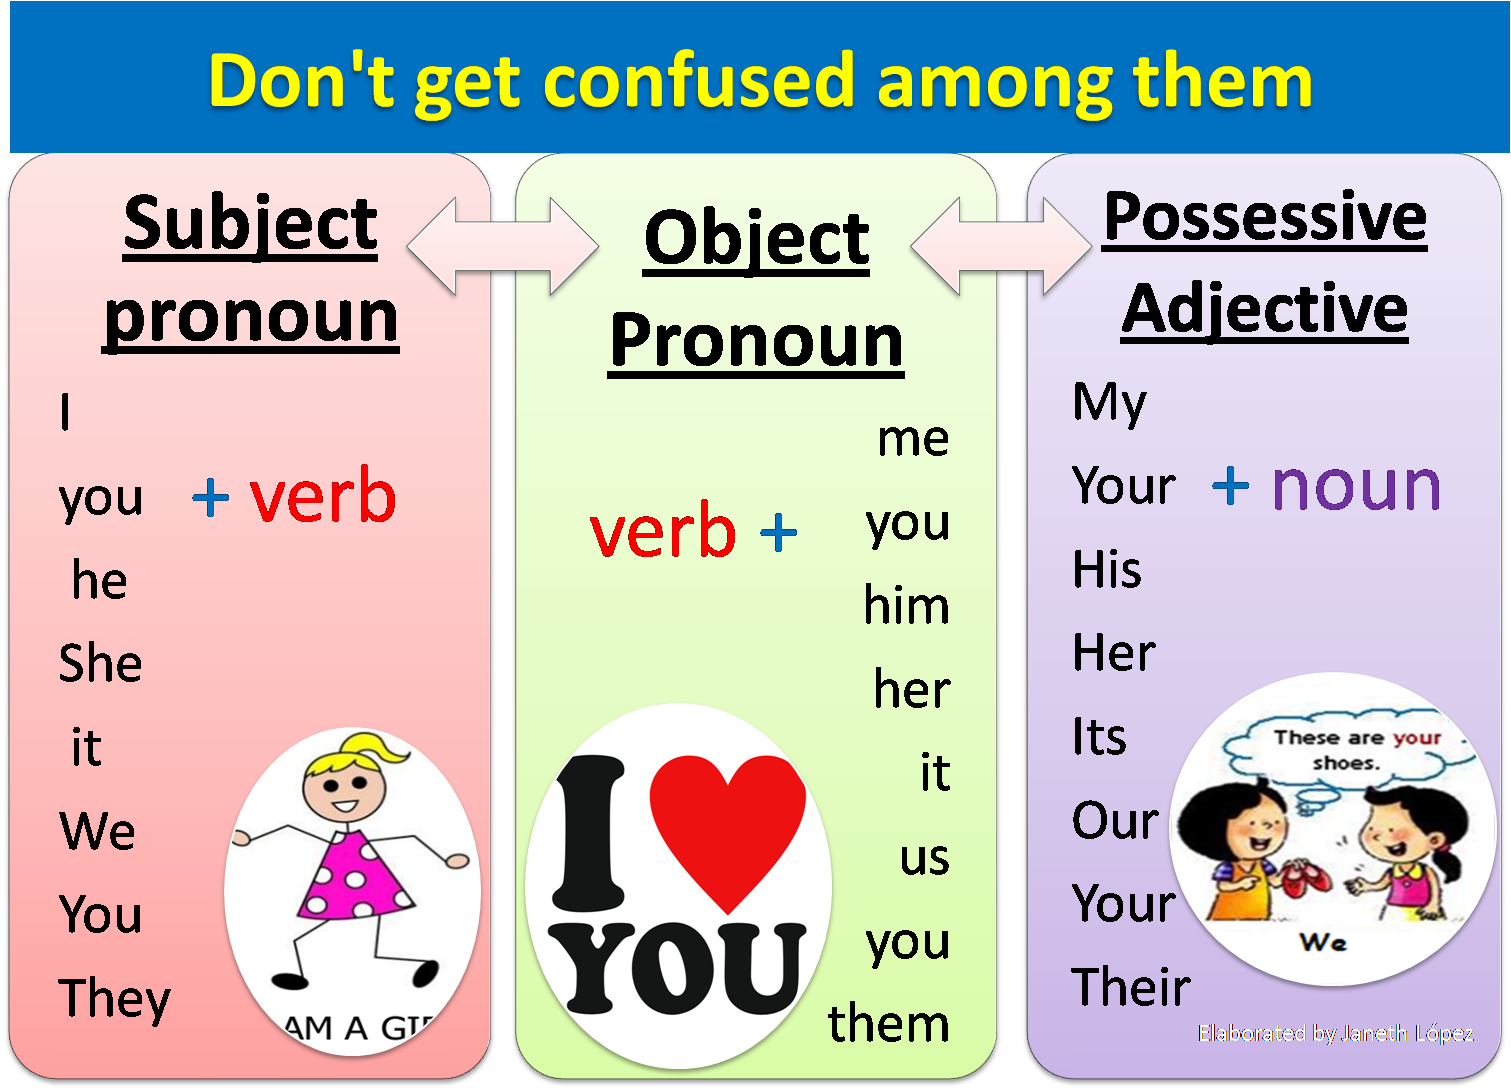 web-english-help-personal-pronouns-possessive-adjectives-and-possessive-pronuns-reflexive